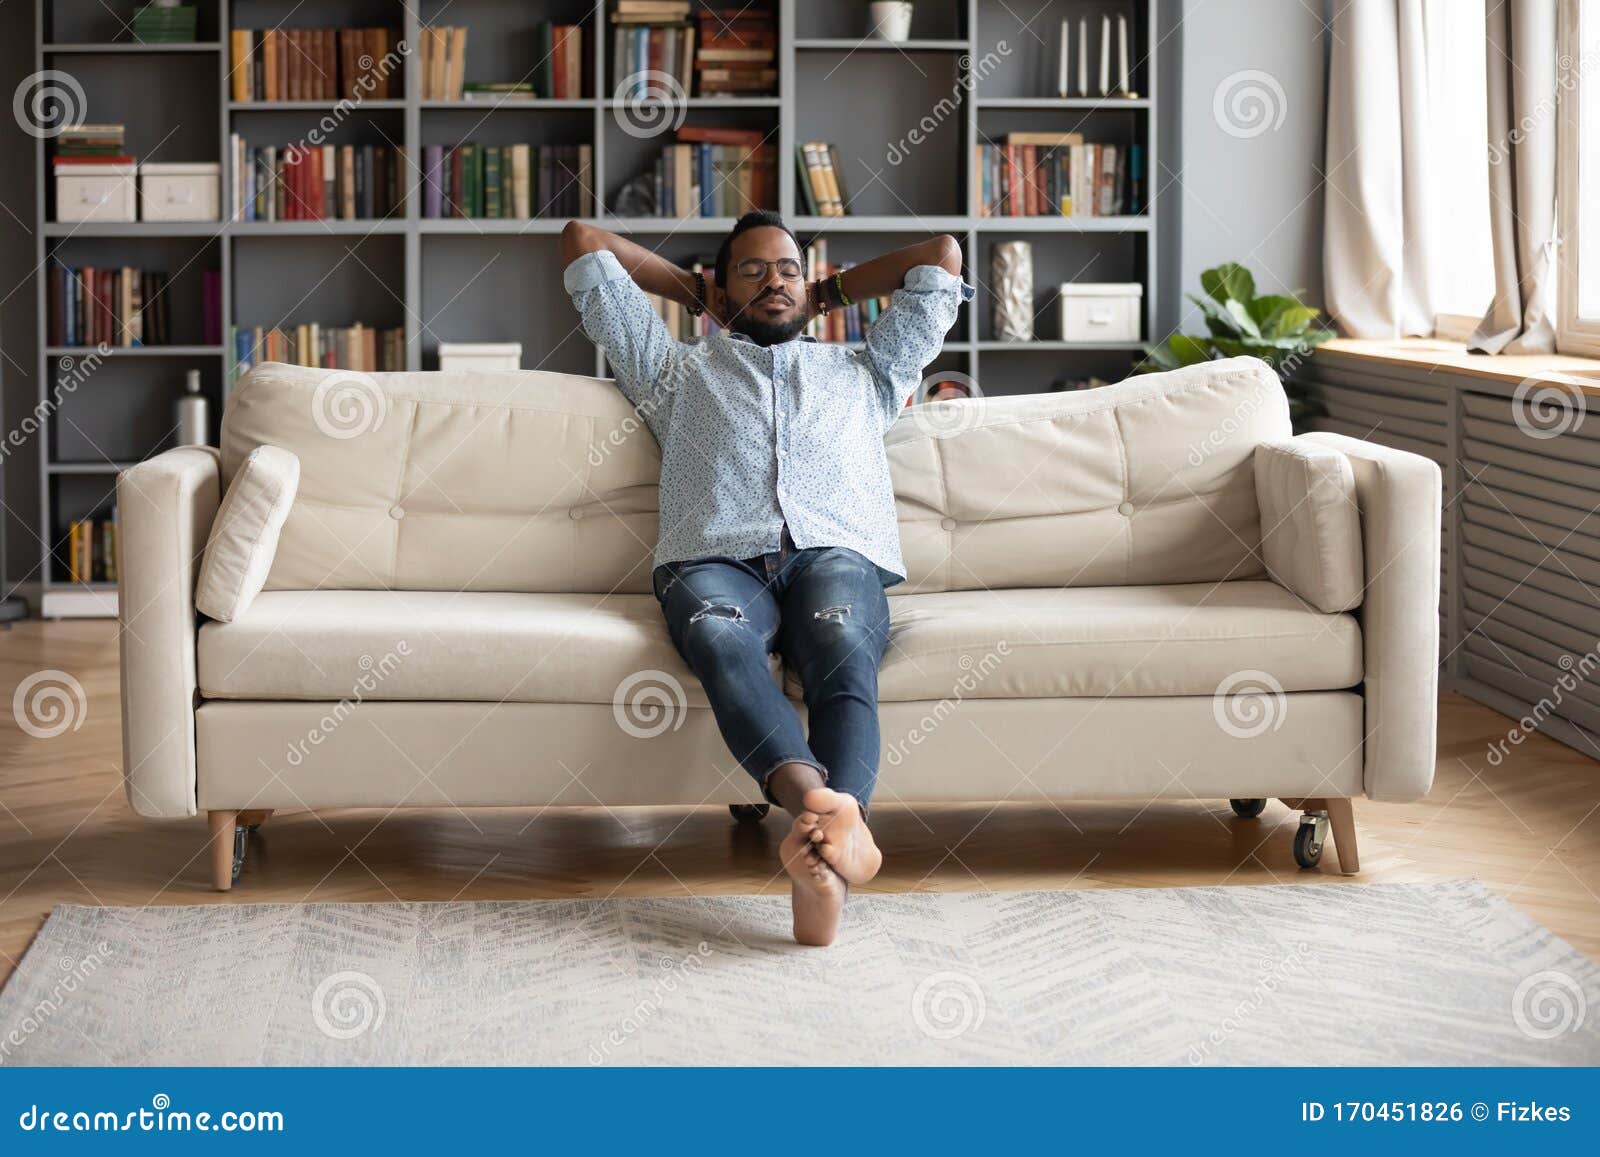 serene barefoot african man resting on sofa hands behind head